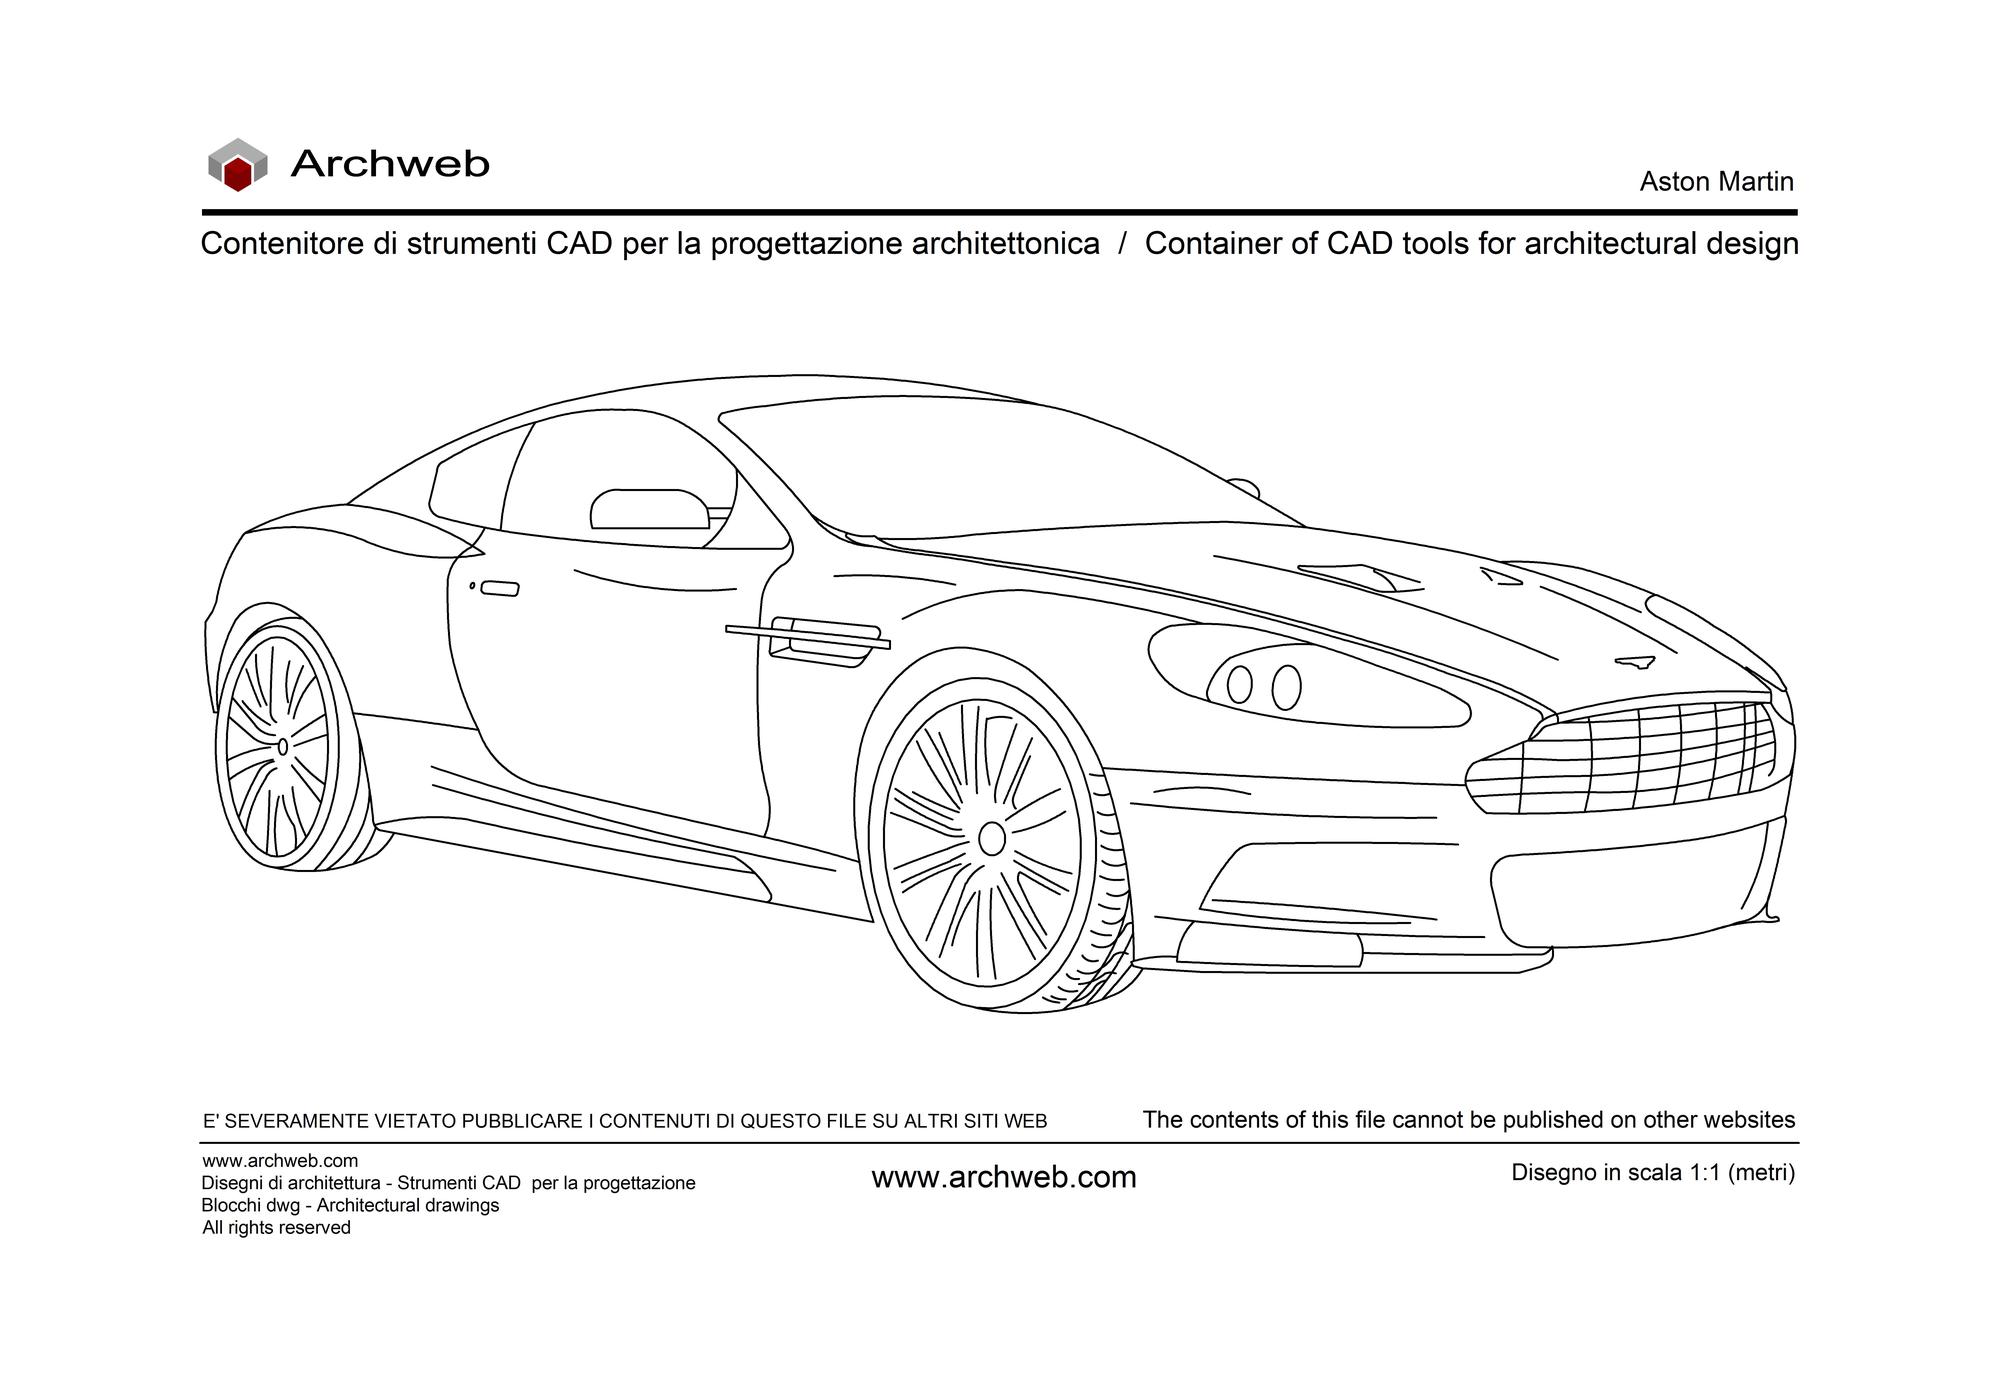 Aston Martin dwg